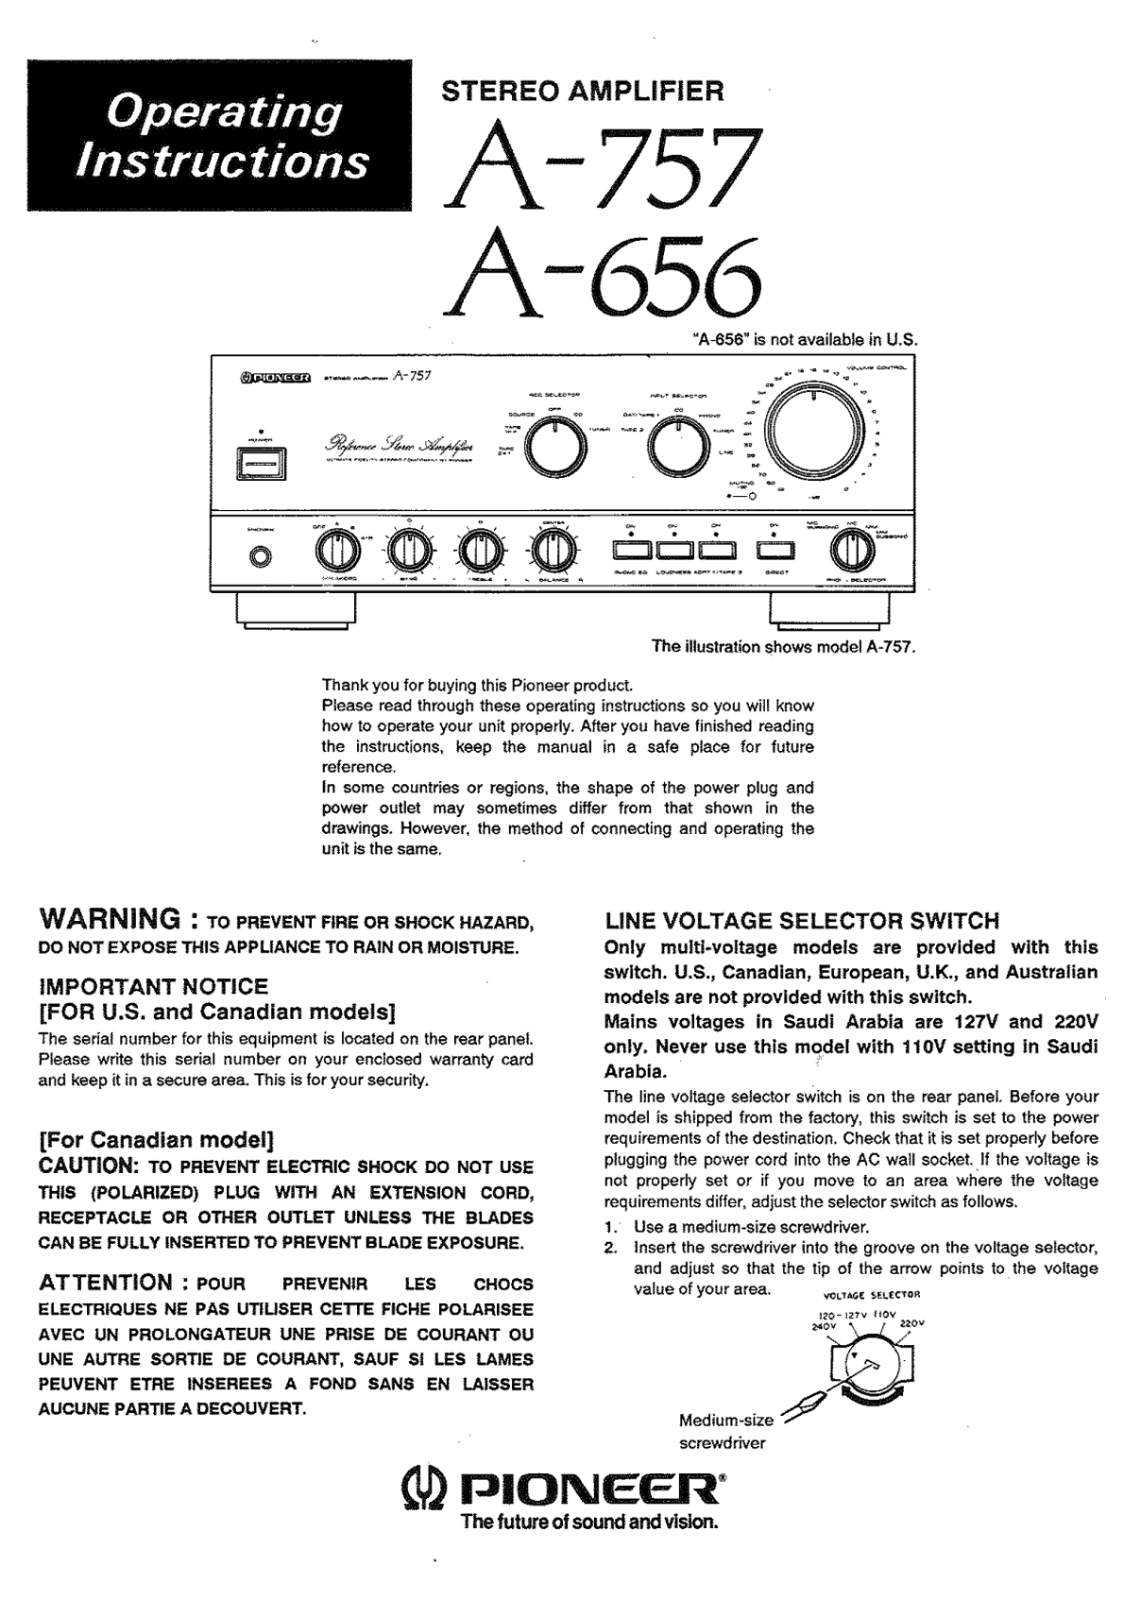 Pioneer A-656 Owners manual